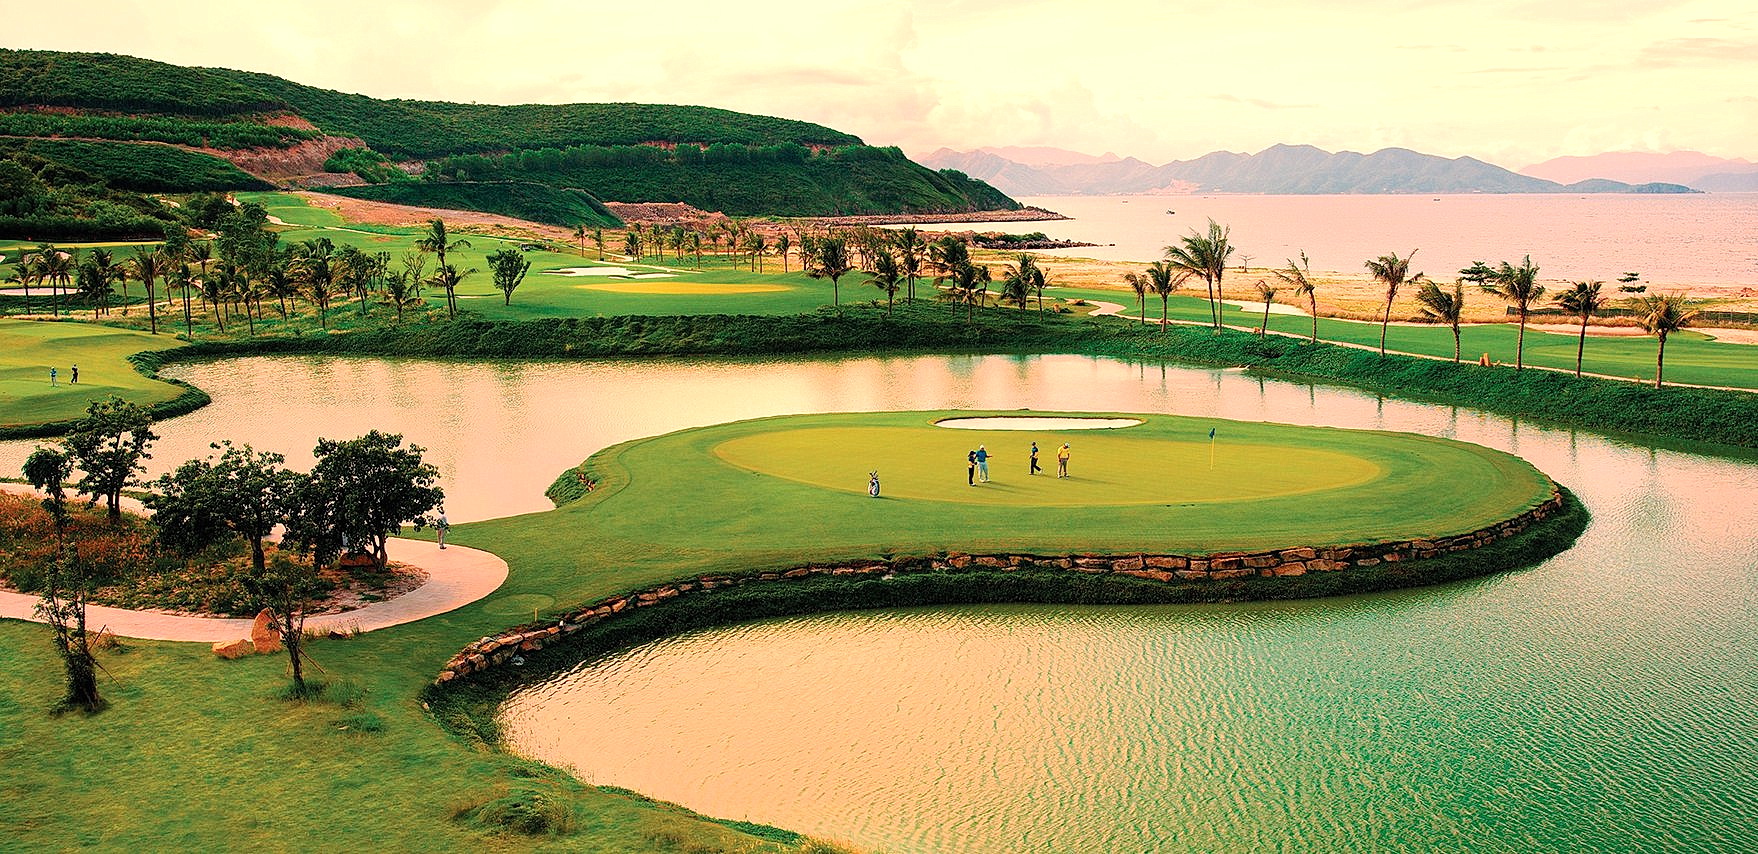 Vinpearl-golf-club-Nha-Trang